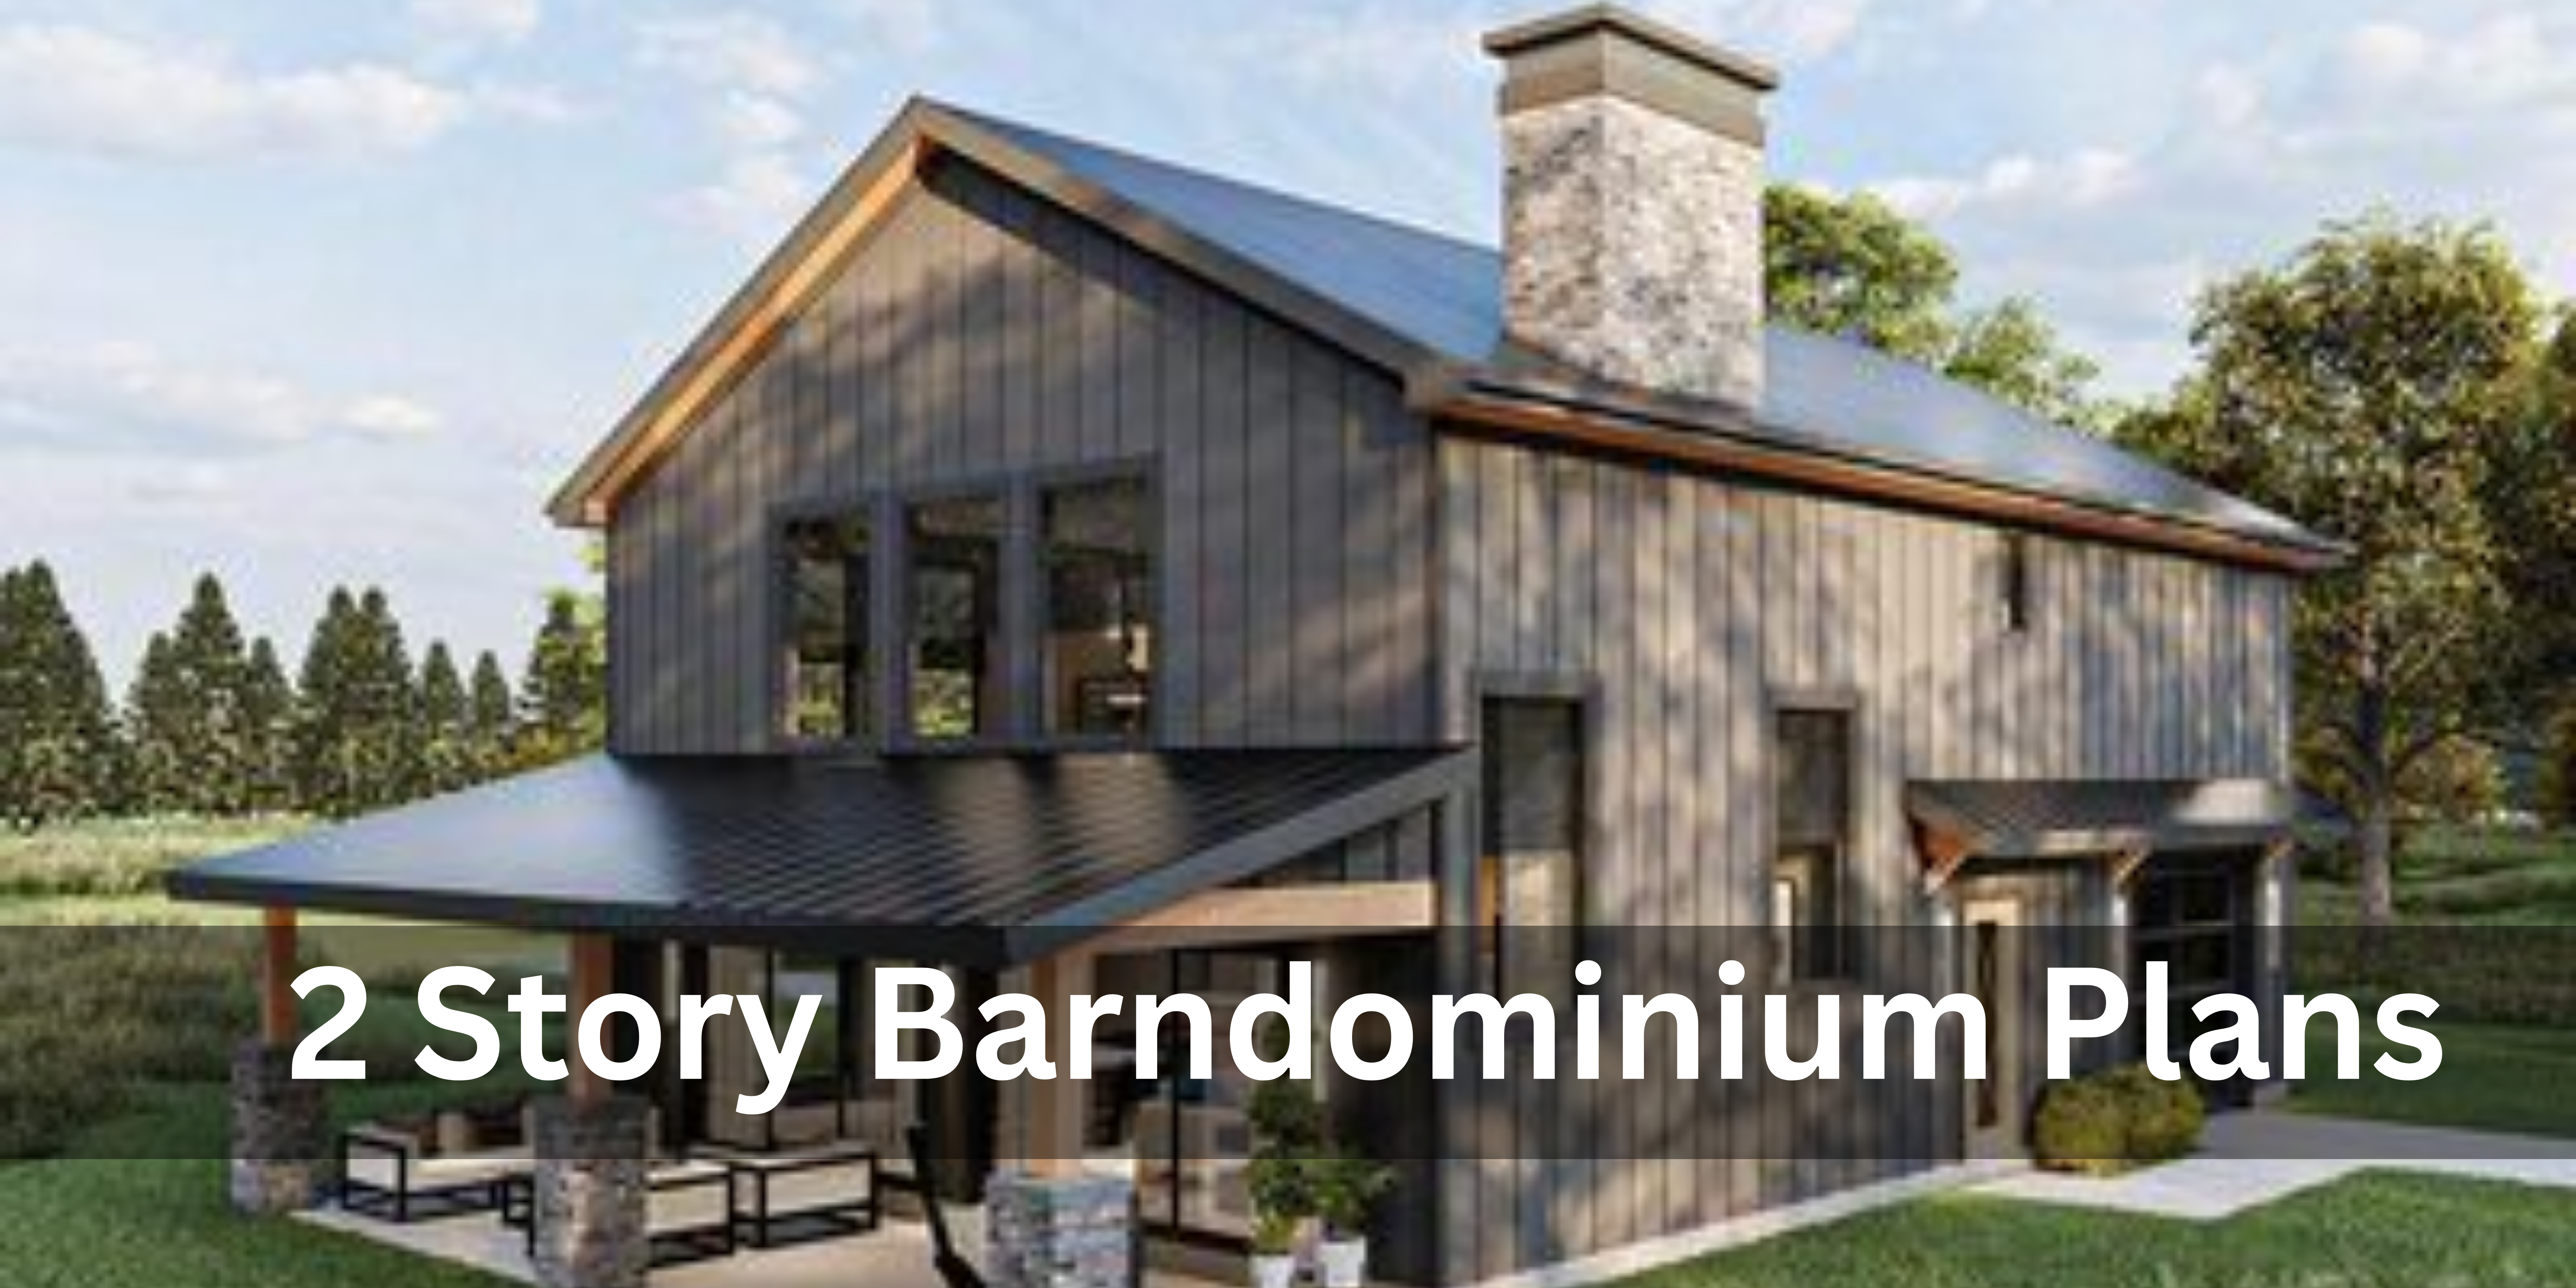 2 Story Barndominium Plans